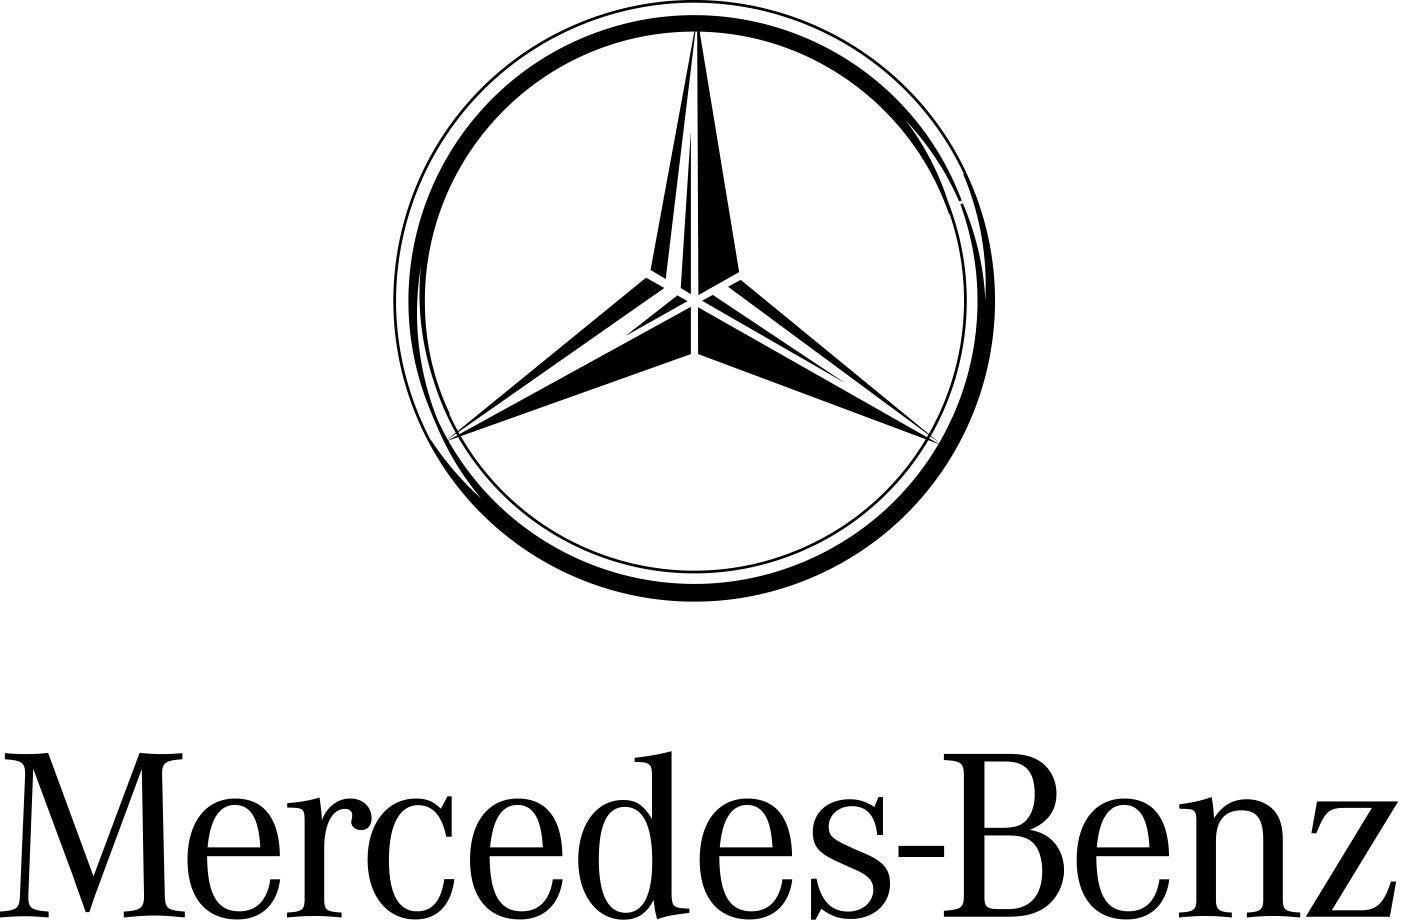 Benz Trucks Logo - Mercedes Benz Trucks Announces Efficient New Axle Technology. Truck